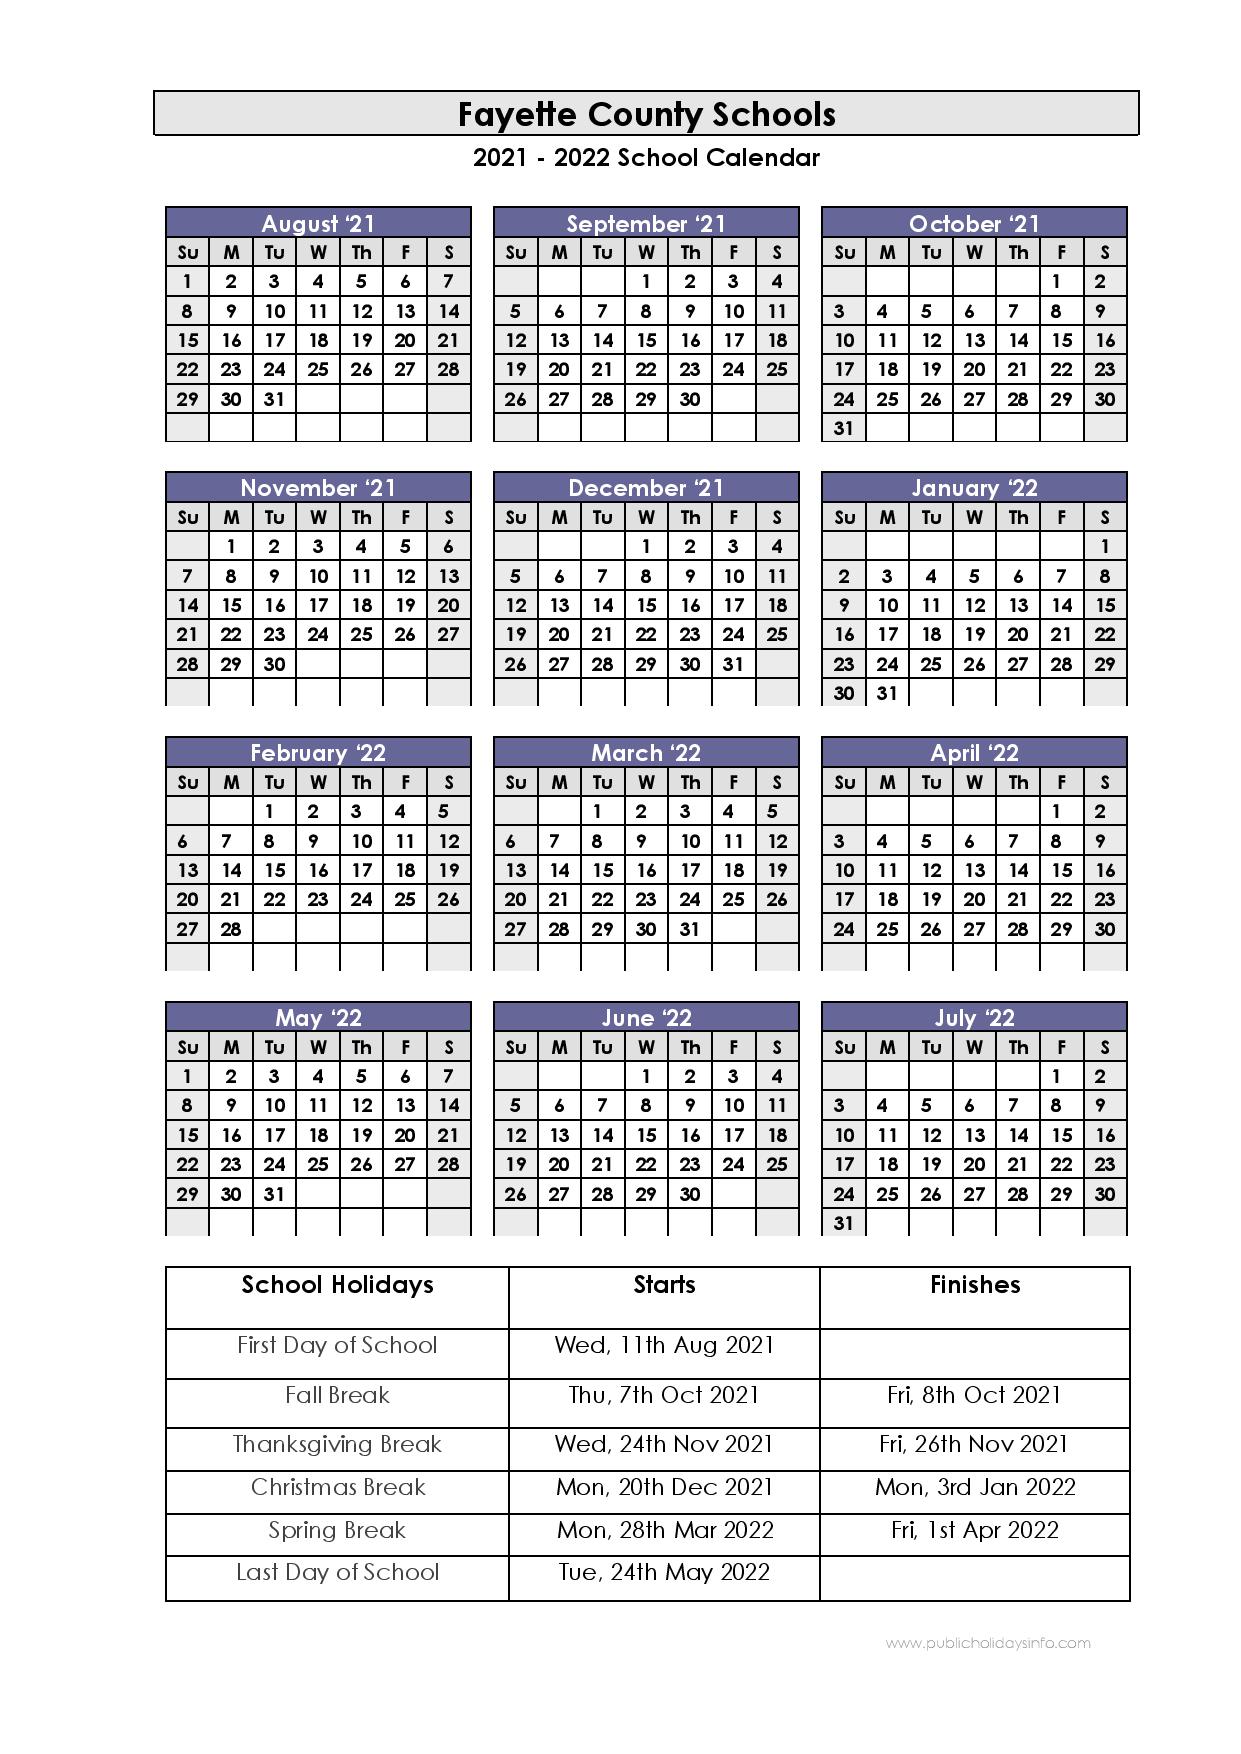 Fayette County Schools Calendar 2021 2022 Kentucky